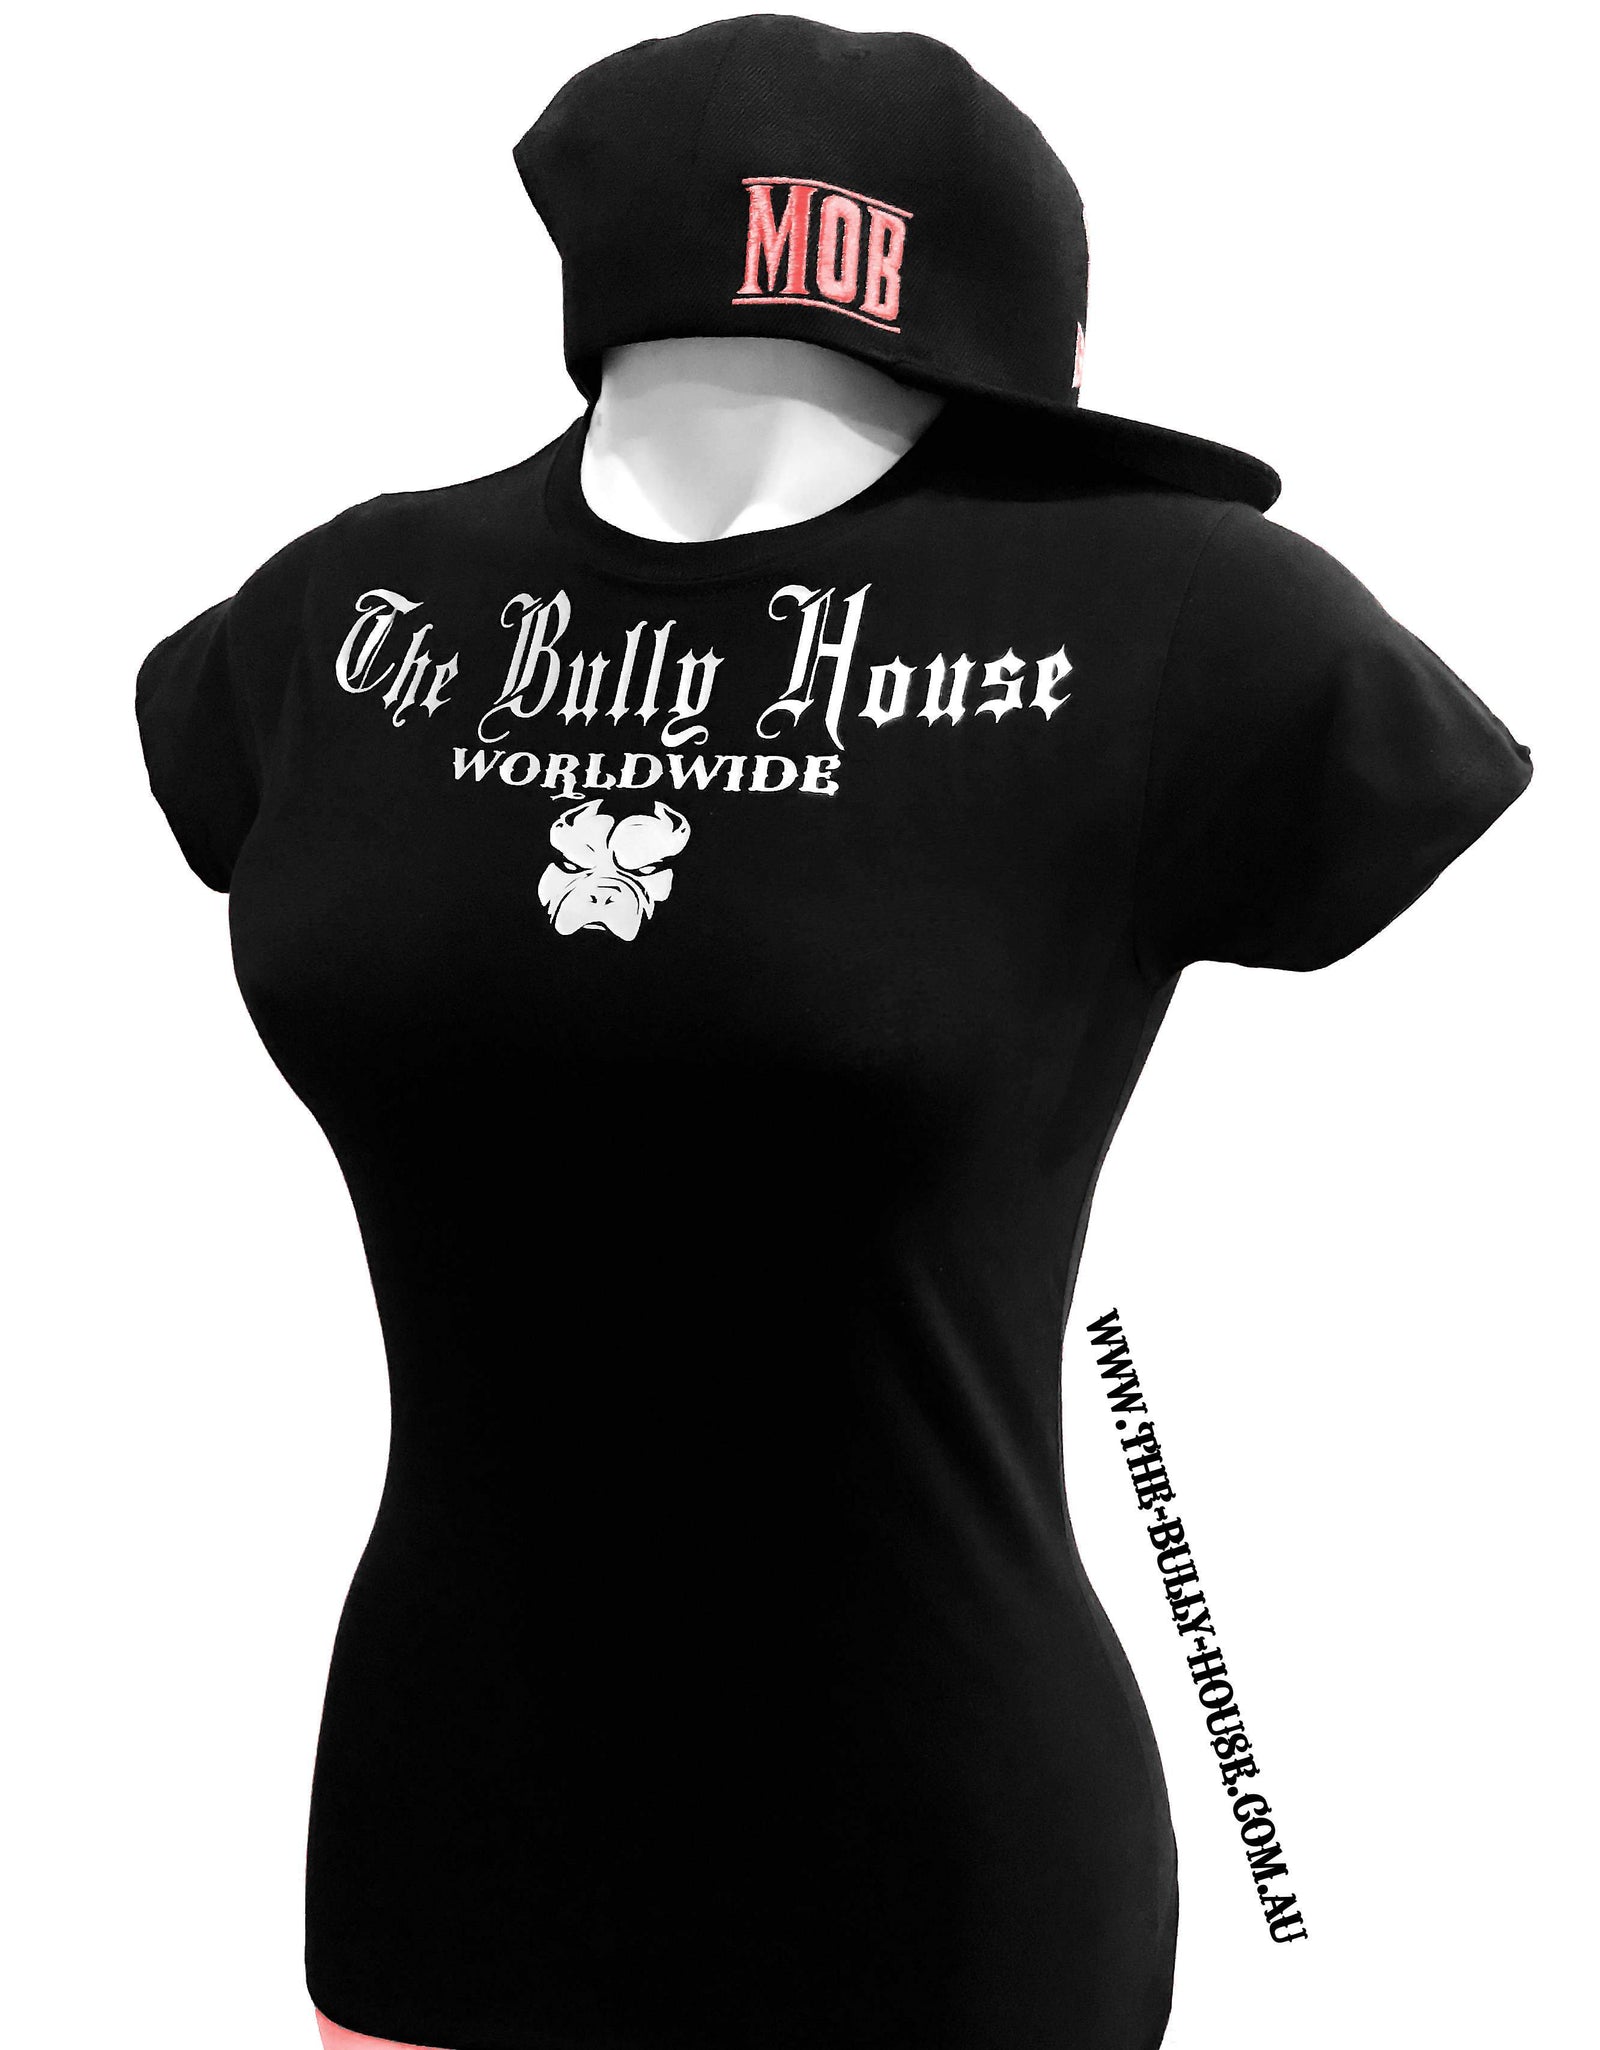 The Bully House -- MEDALLION -- T-Shirt - WOMENS CUT // White Print